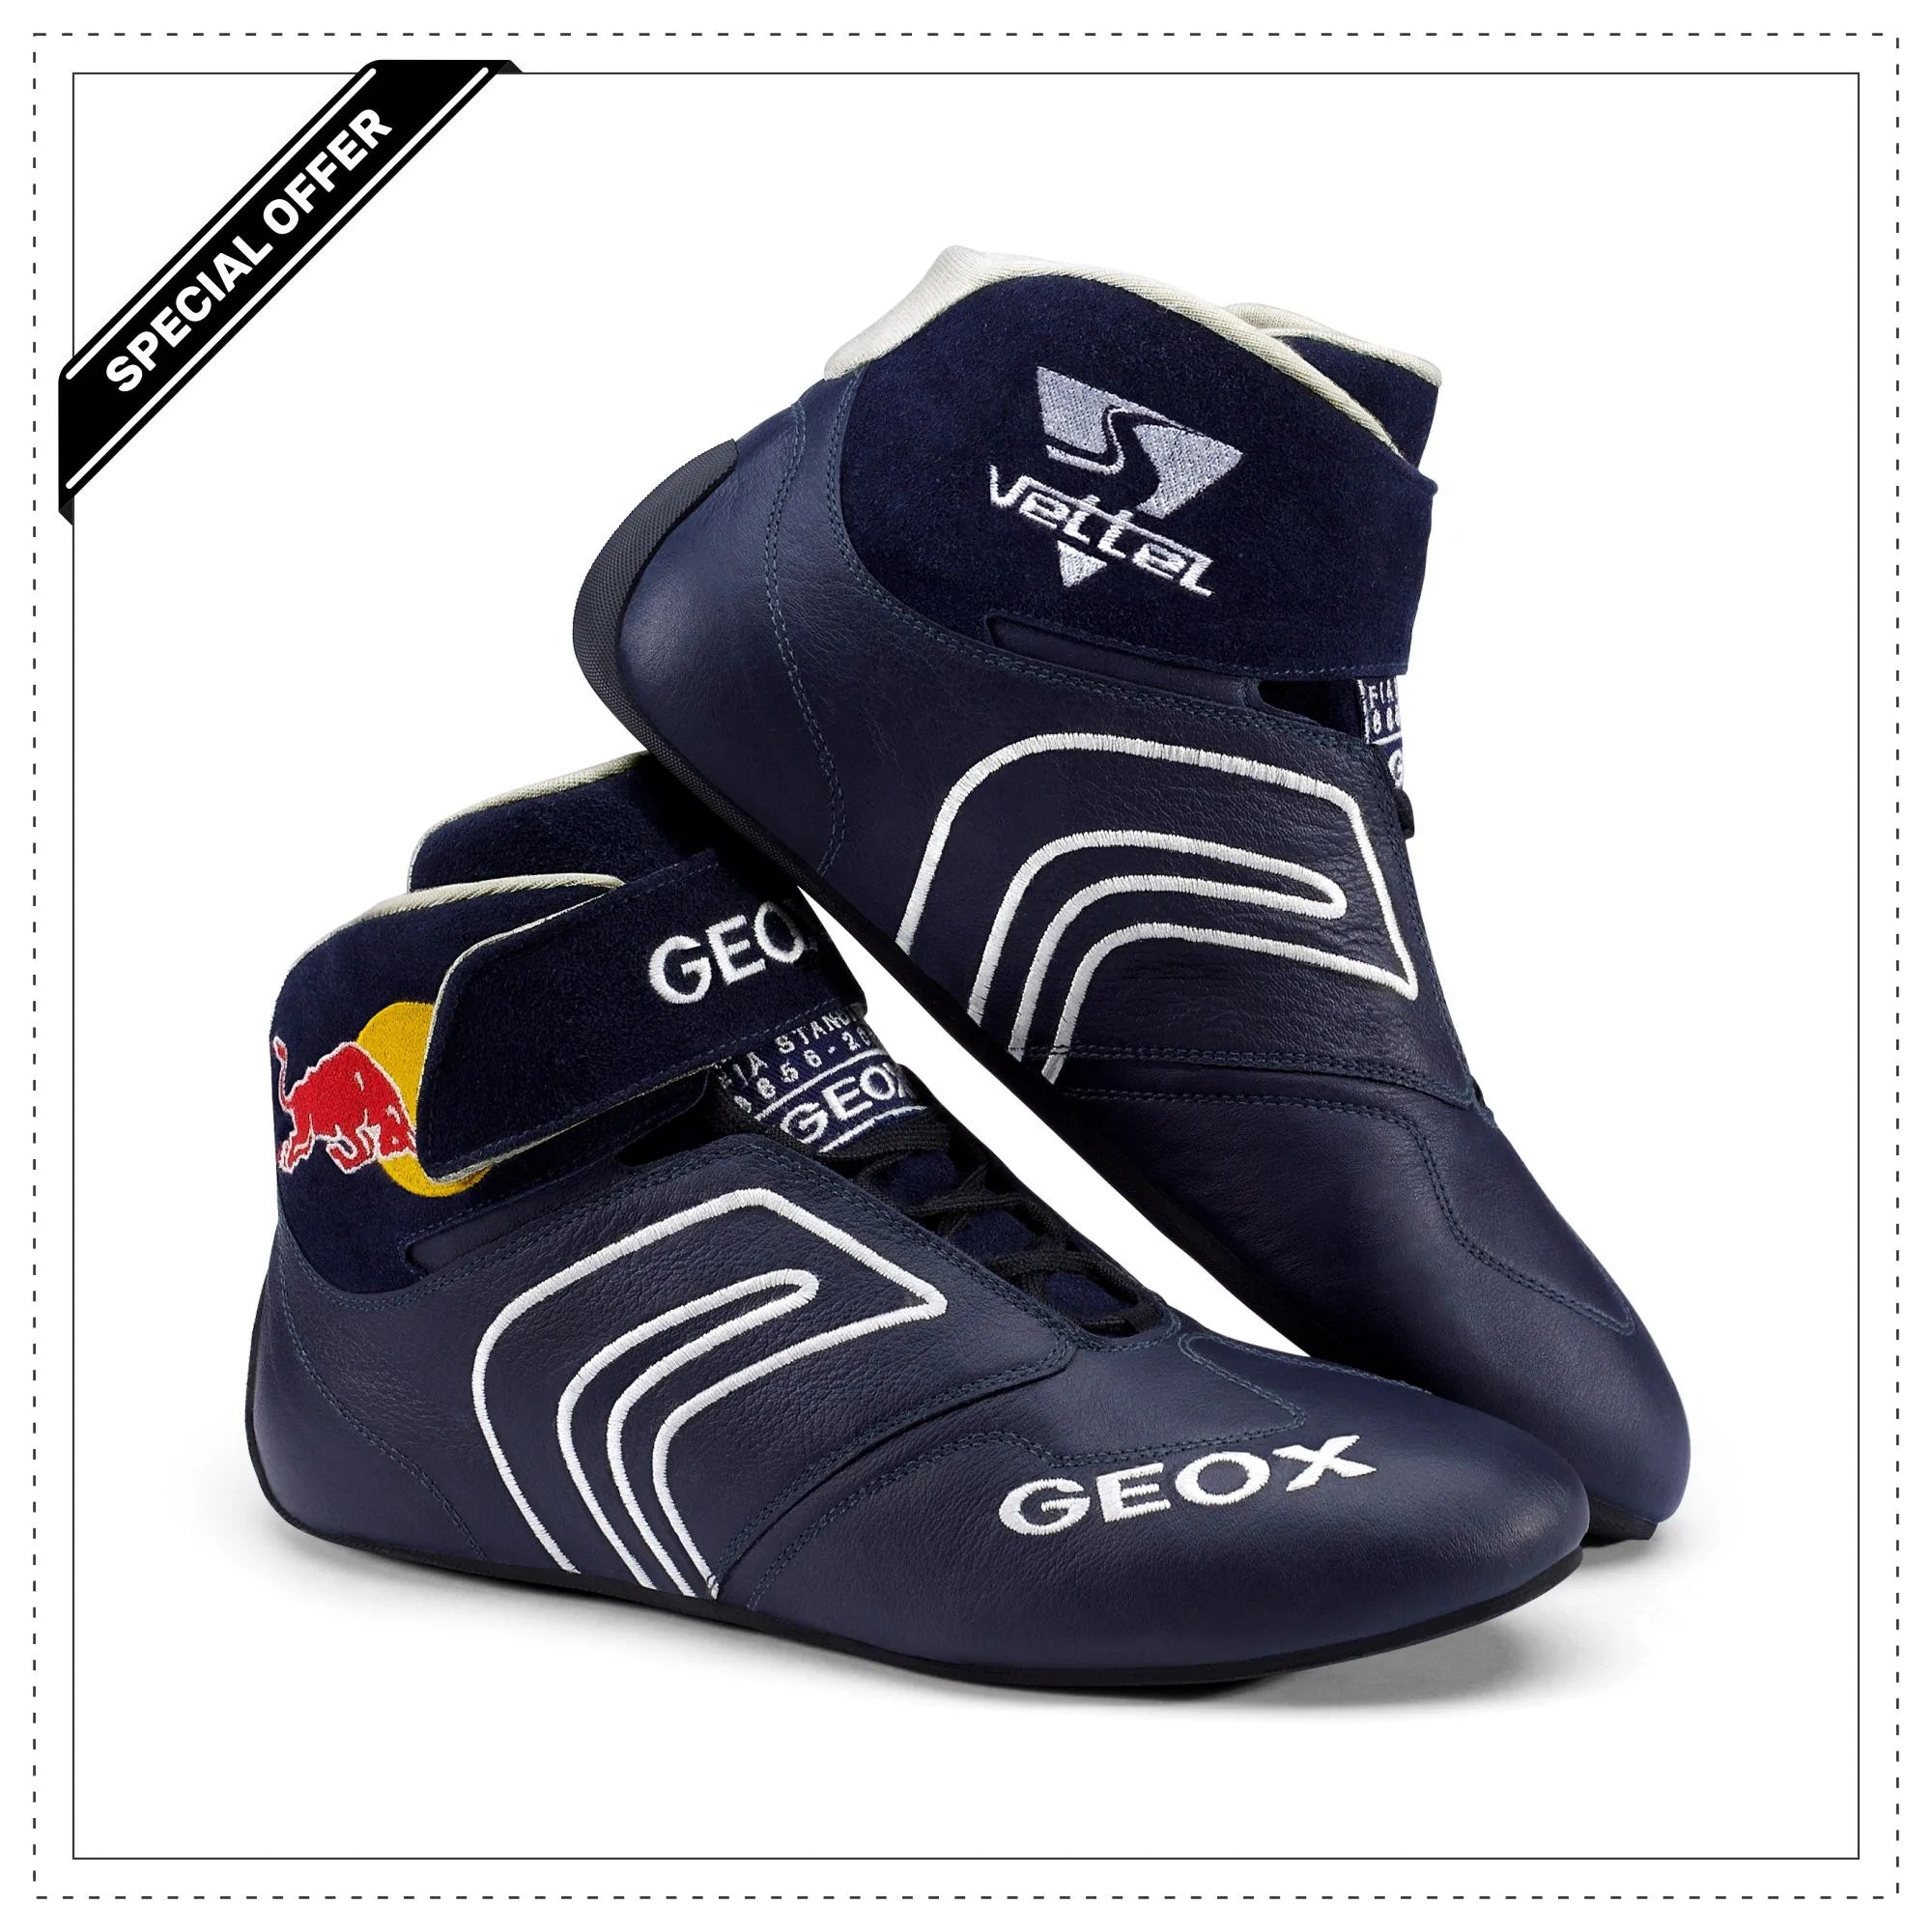 鍔 manual dorado Redbull Geox Race Shoes – pearlracewear